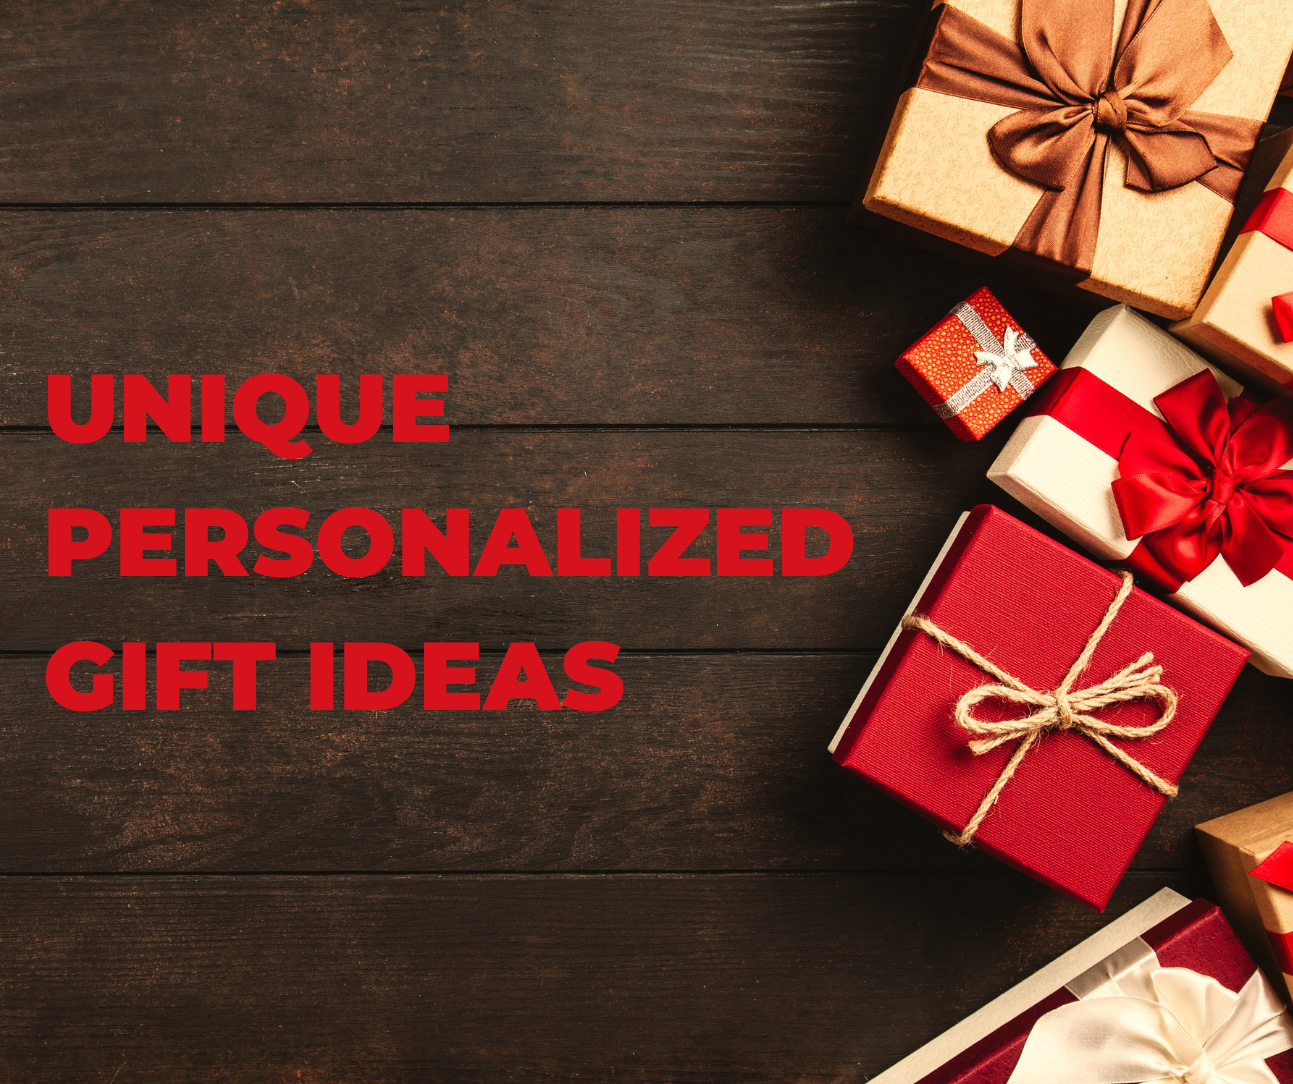 Unique Personalized Gift Ideas